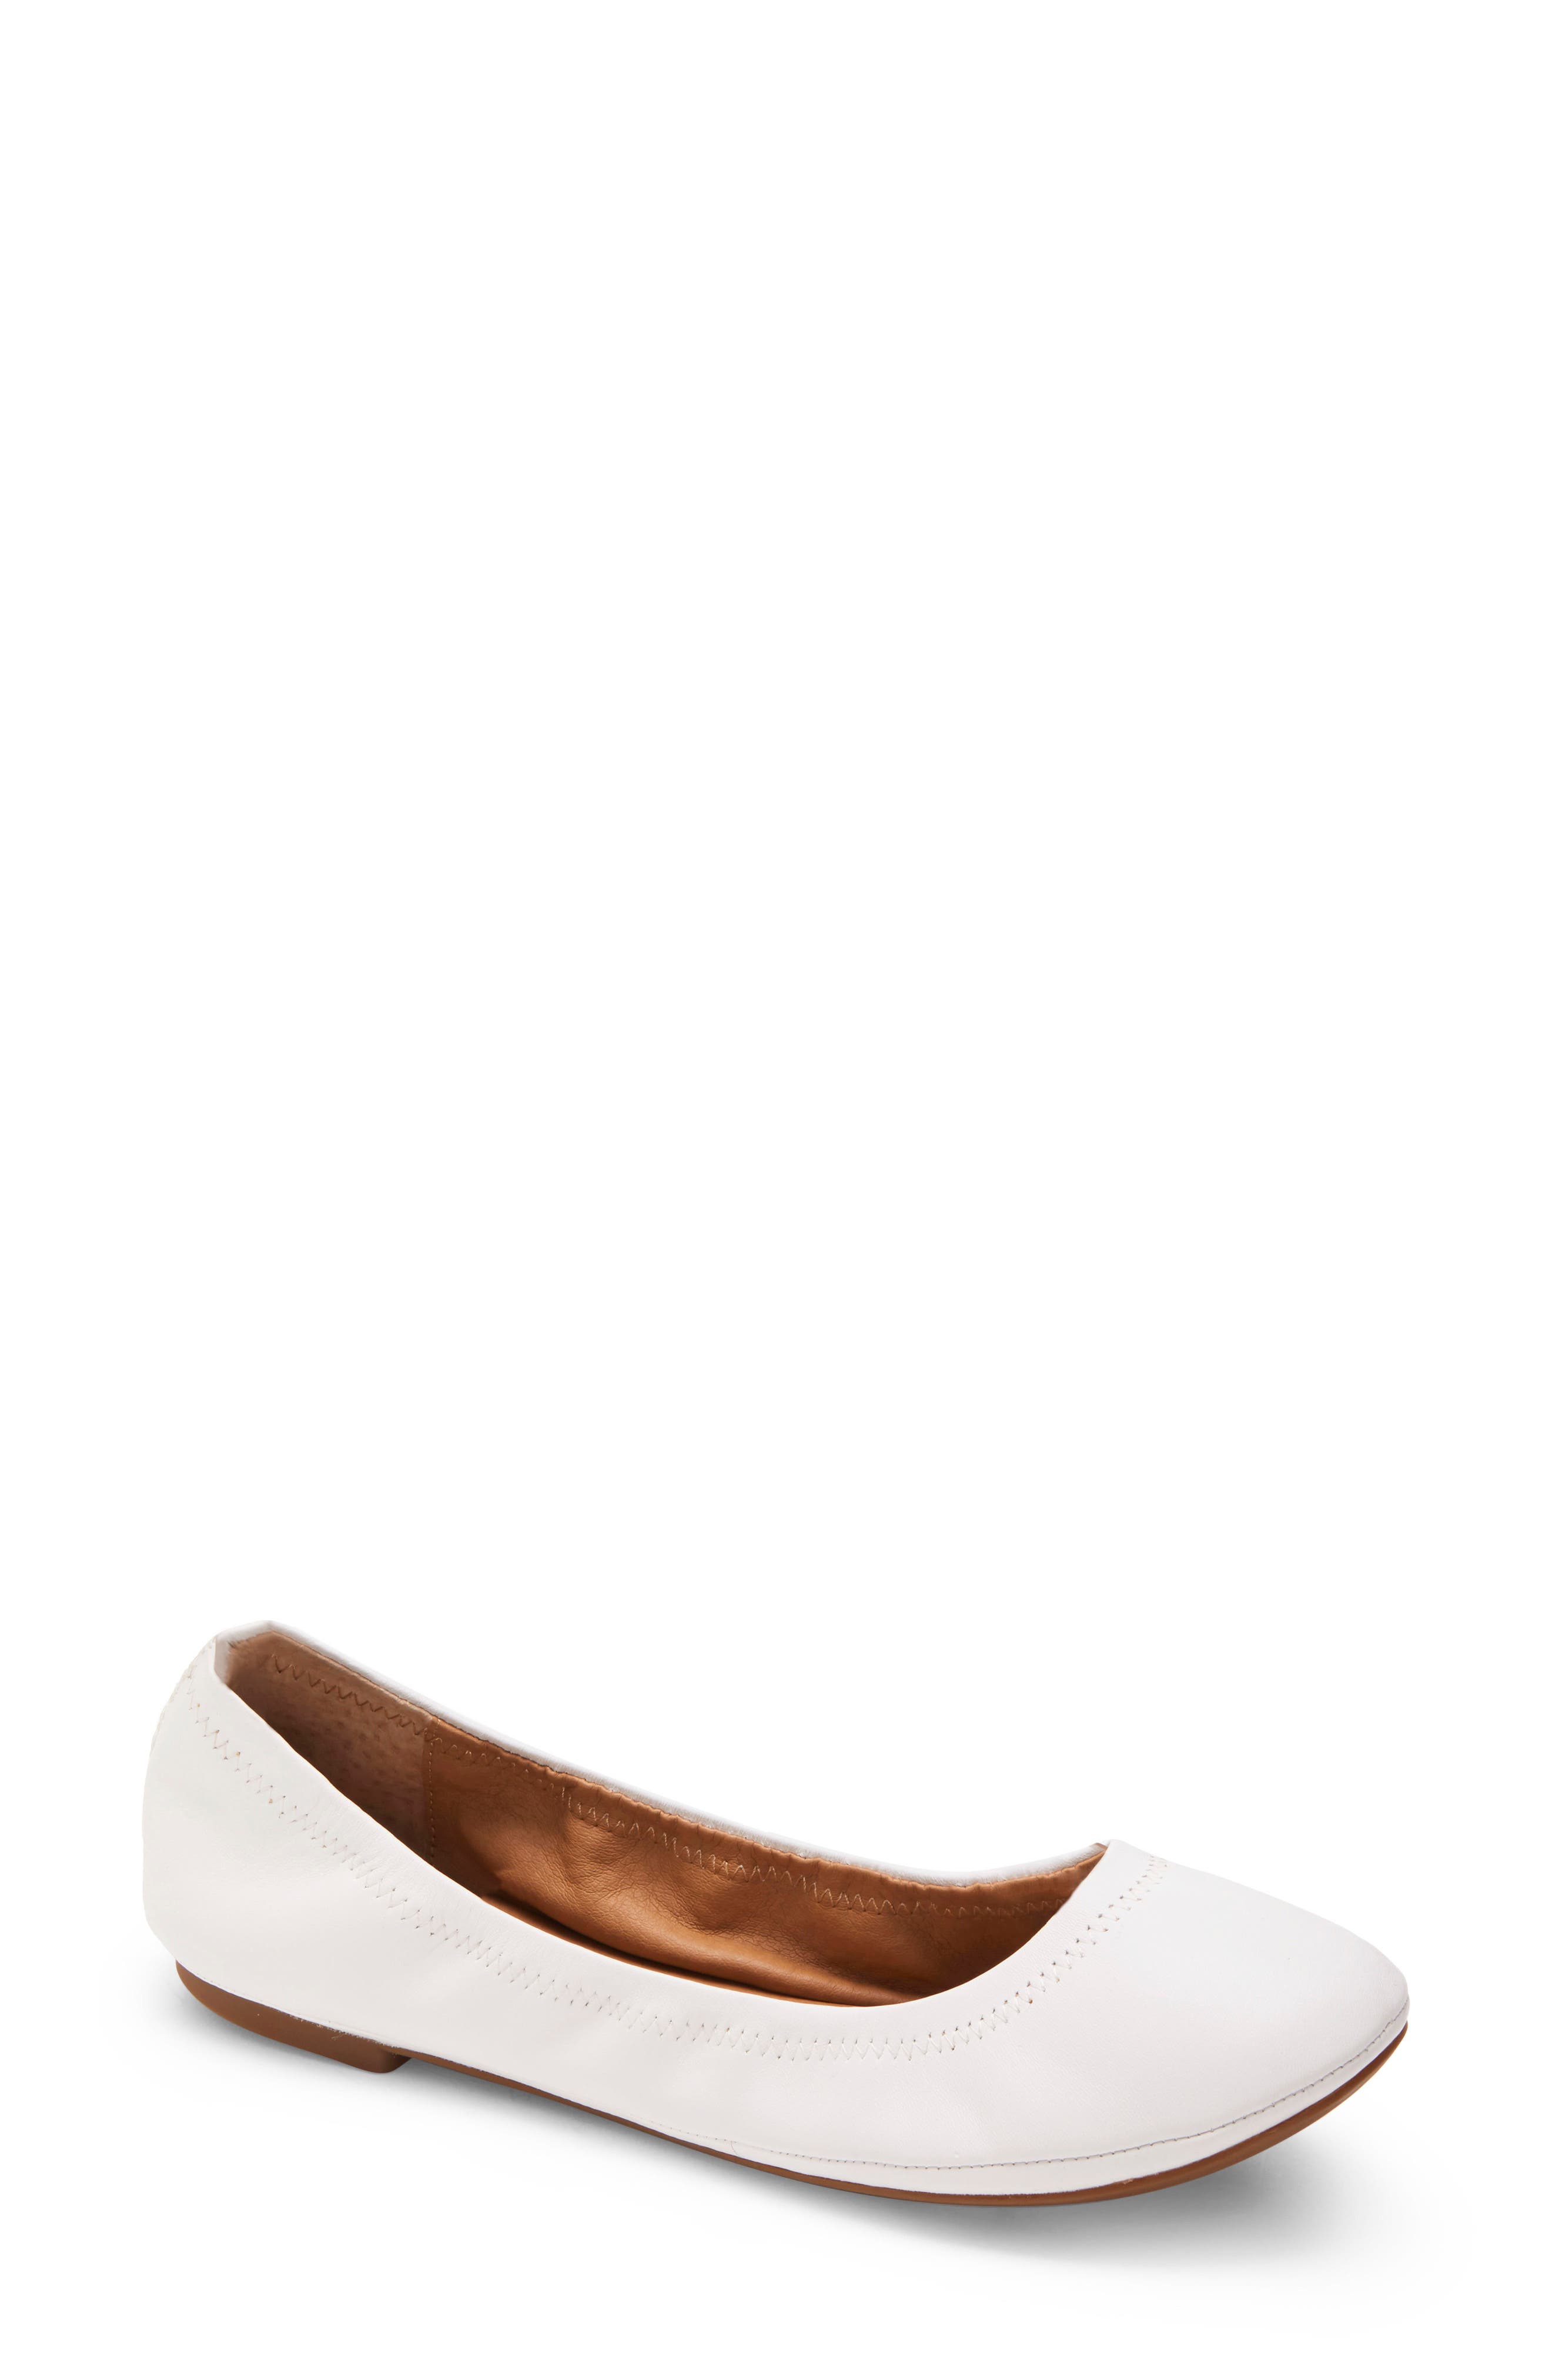 white flat dress shoes